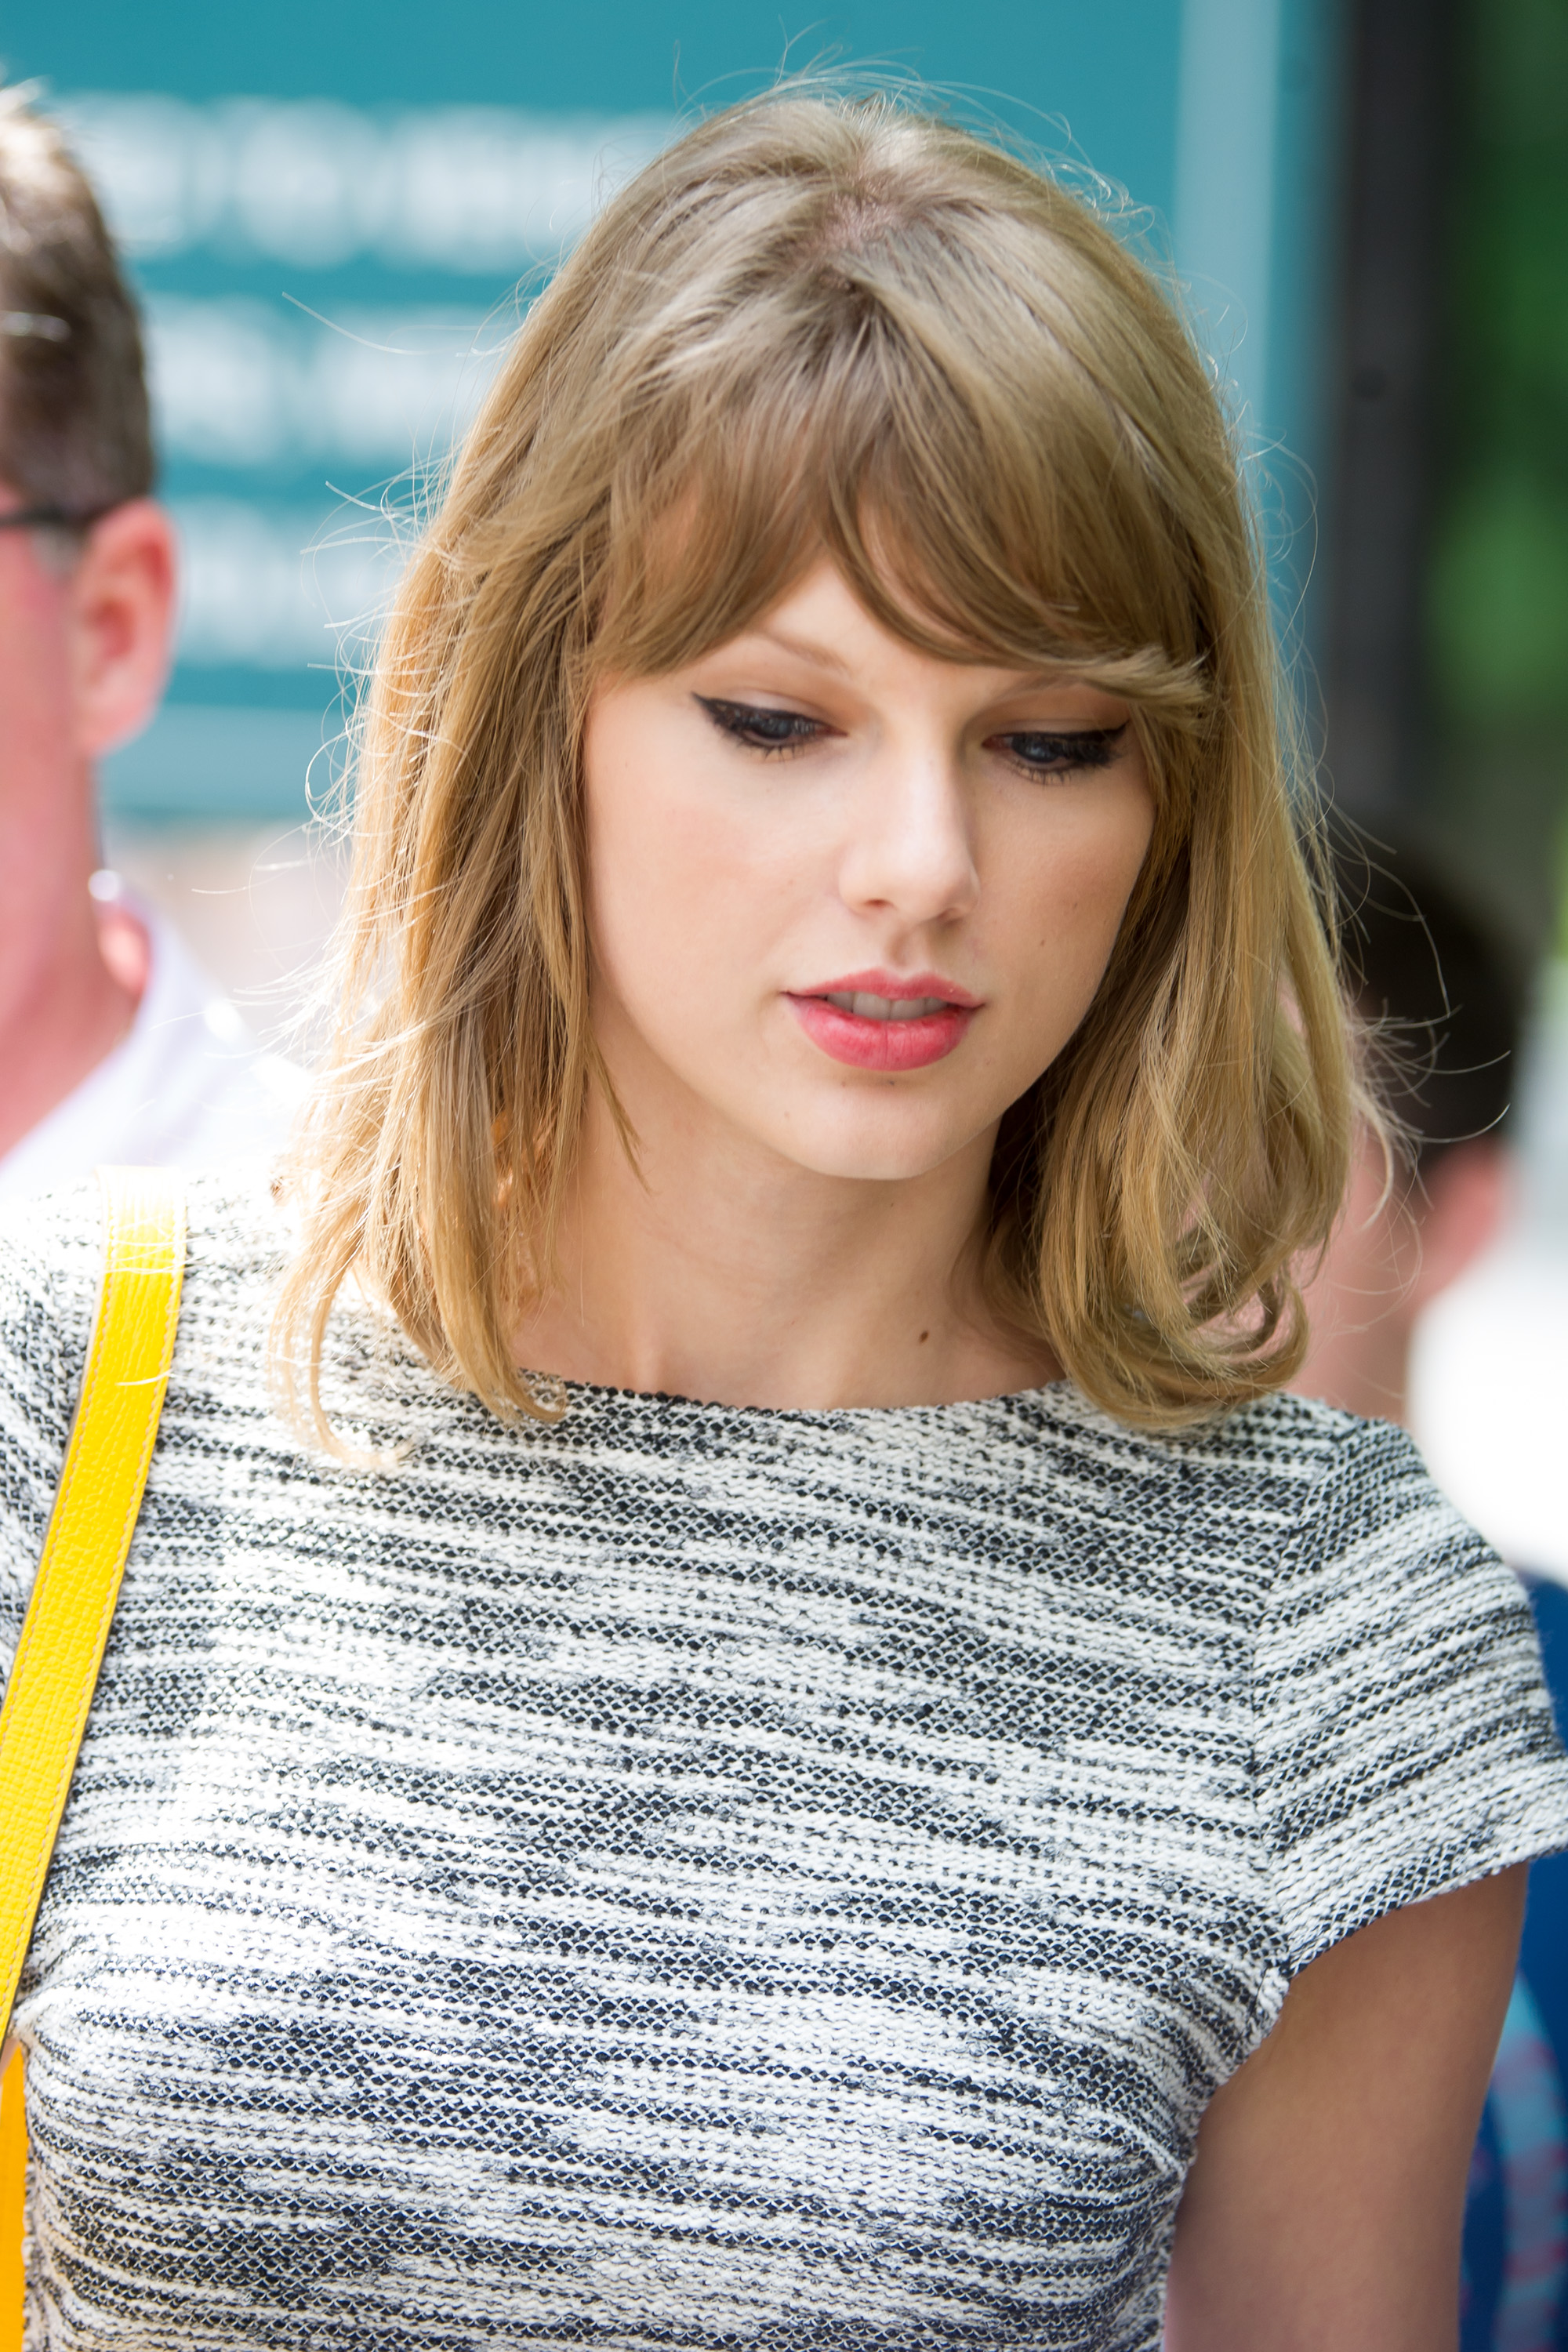 Taylor Swift wallpaper & Bio free download, Image, Wallpaper